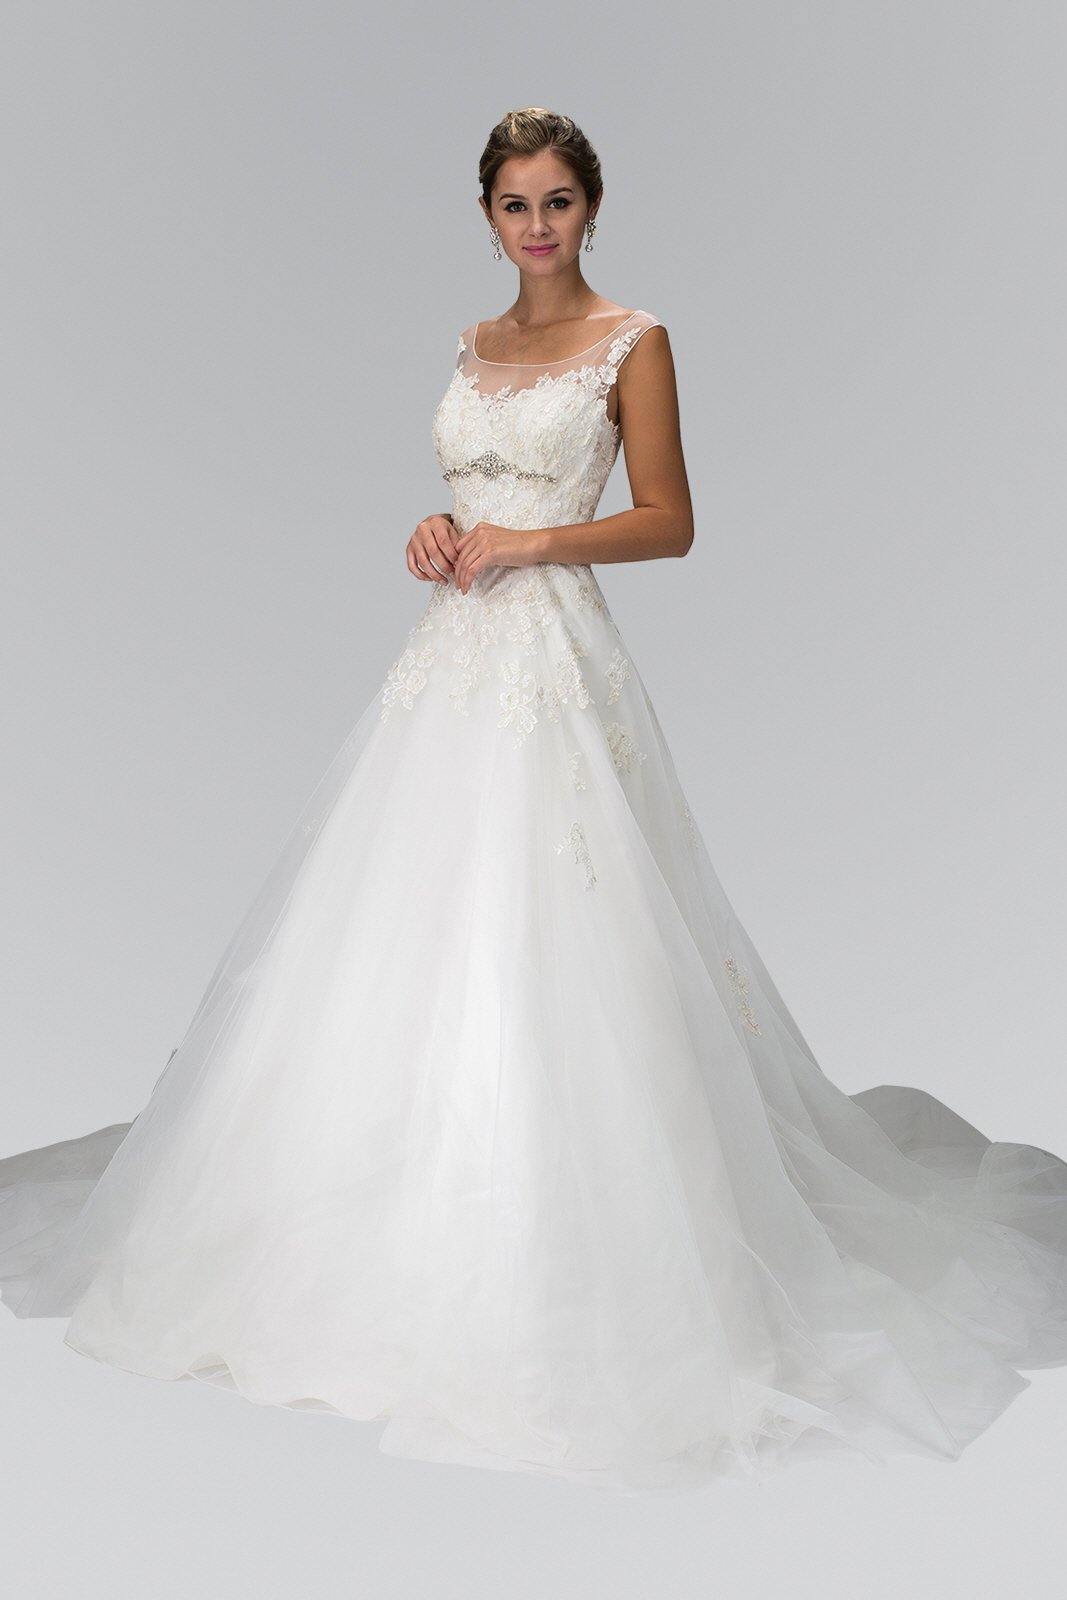 A-Line Wedding Long Dress with Sheer Yoke Neckline - The Dress Outlet Elizabeth K